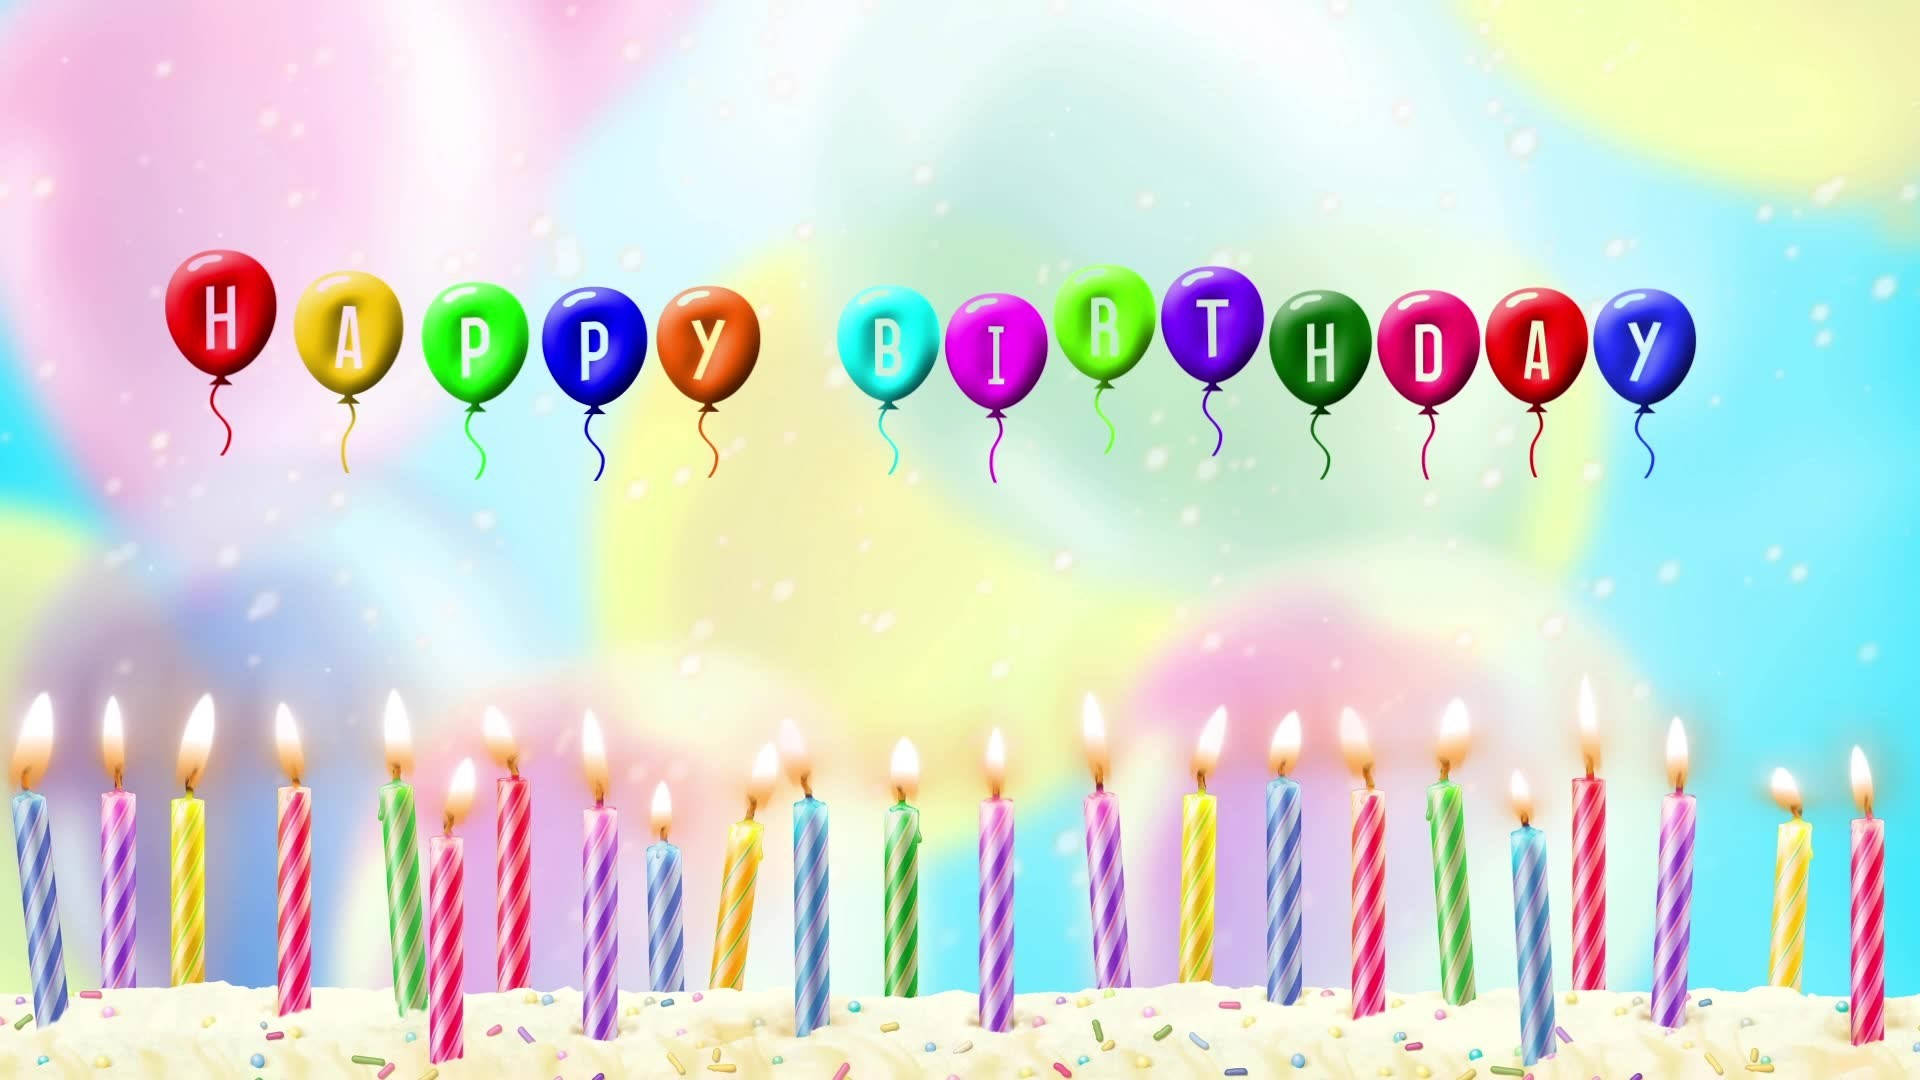 Balõescoloridos, Bolo De Aniversário E Velas. Papel de Parede